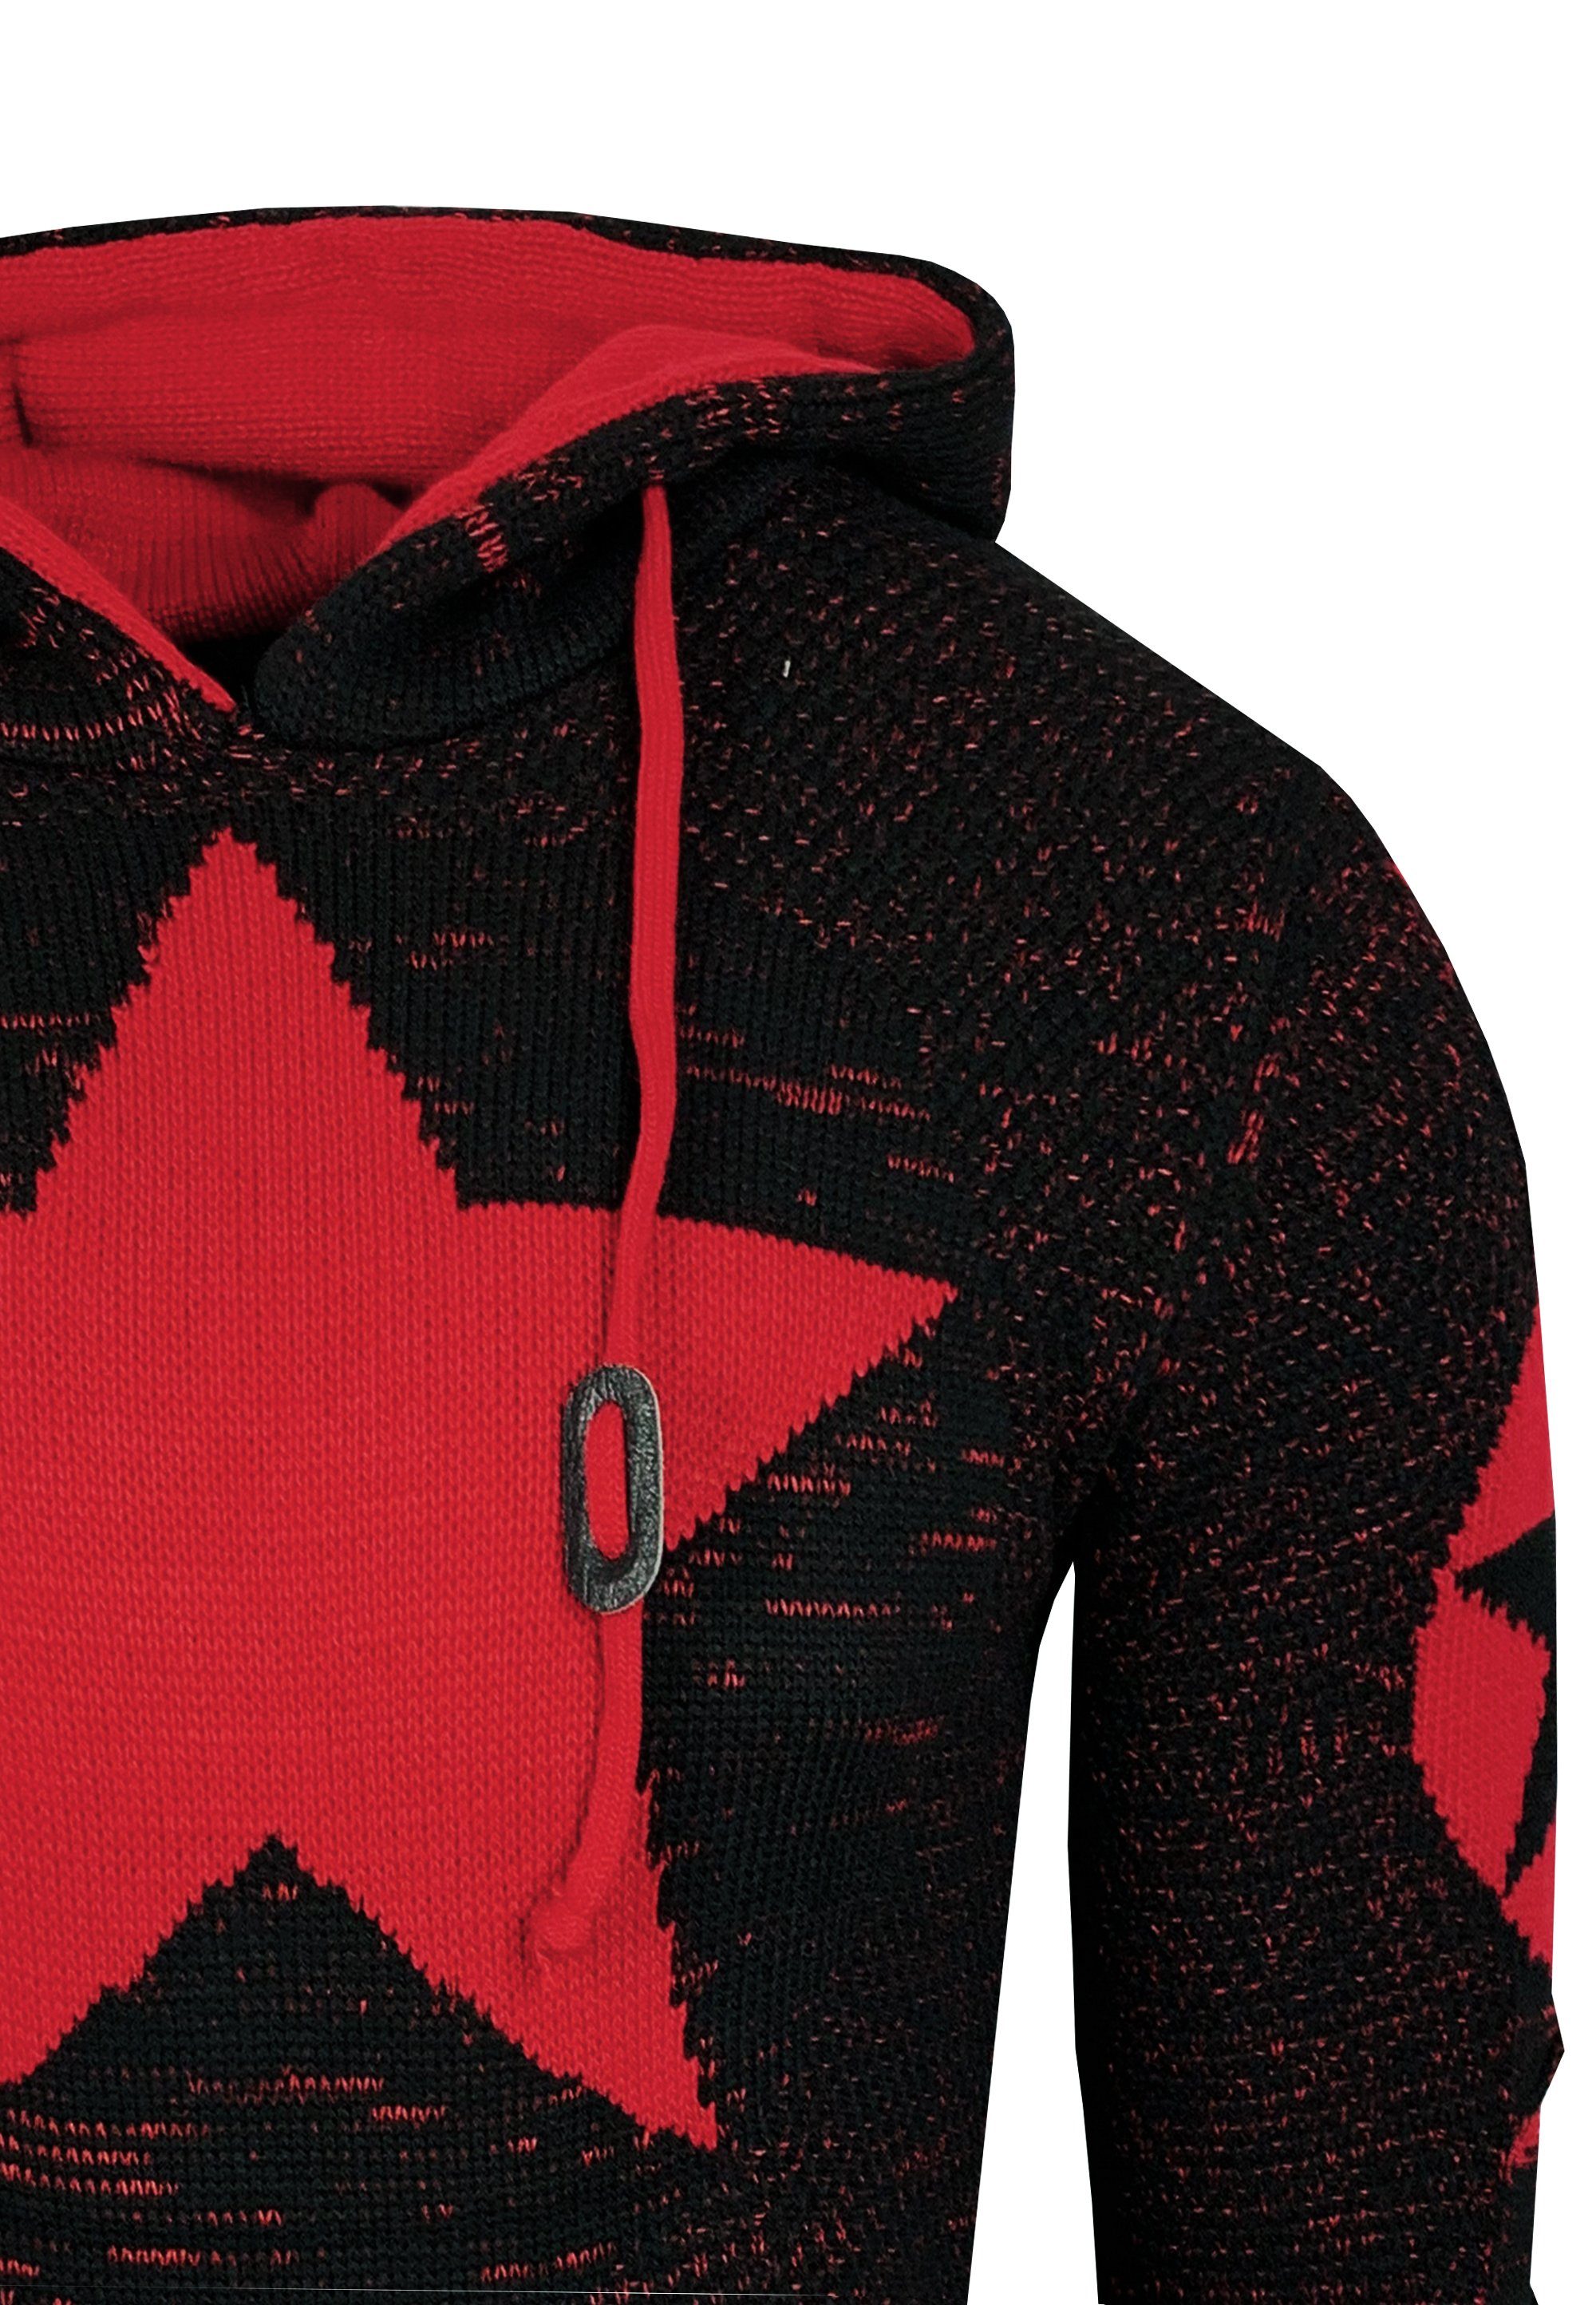 Neal großem mit Rusty Stern-Design schwarz-rot Kapuzensweatshirt